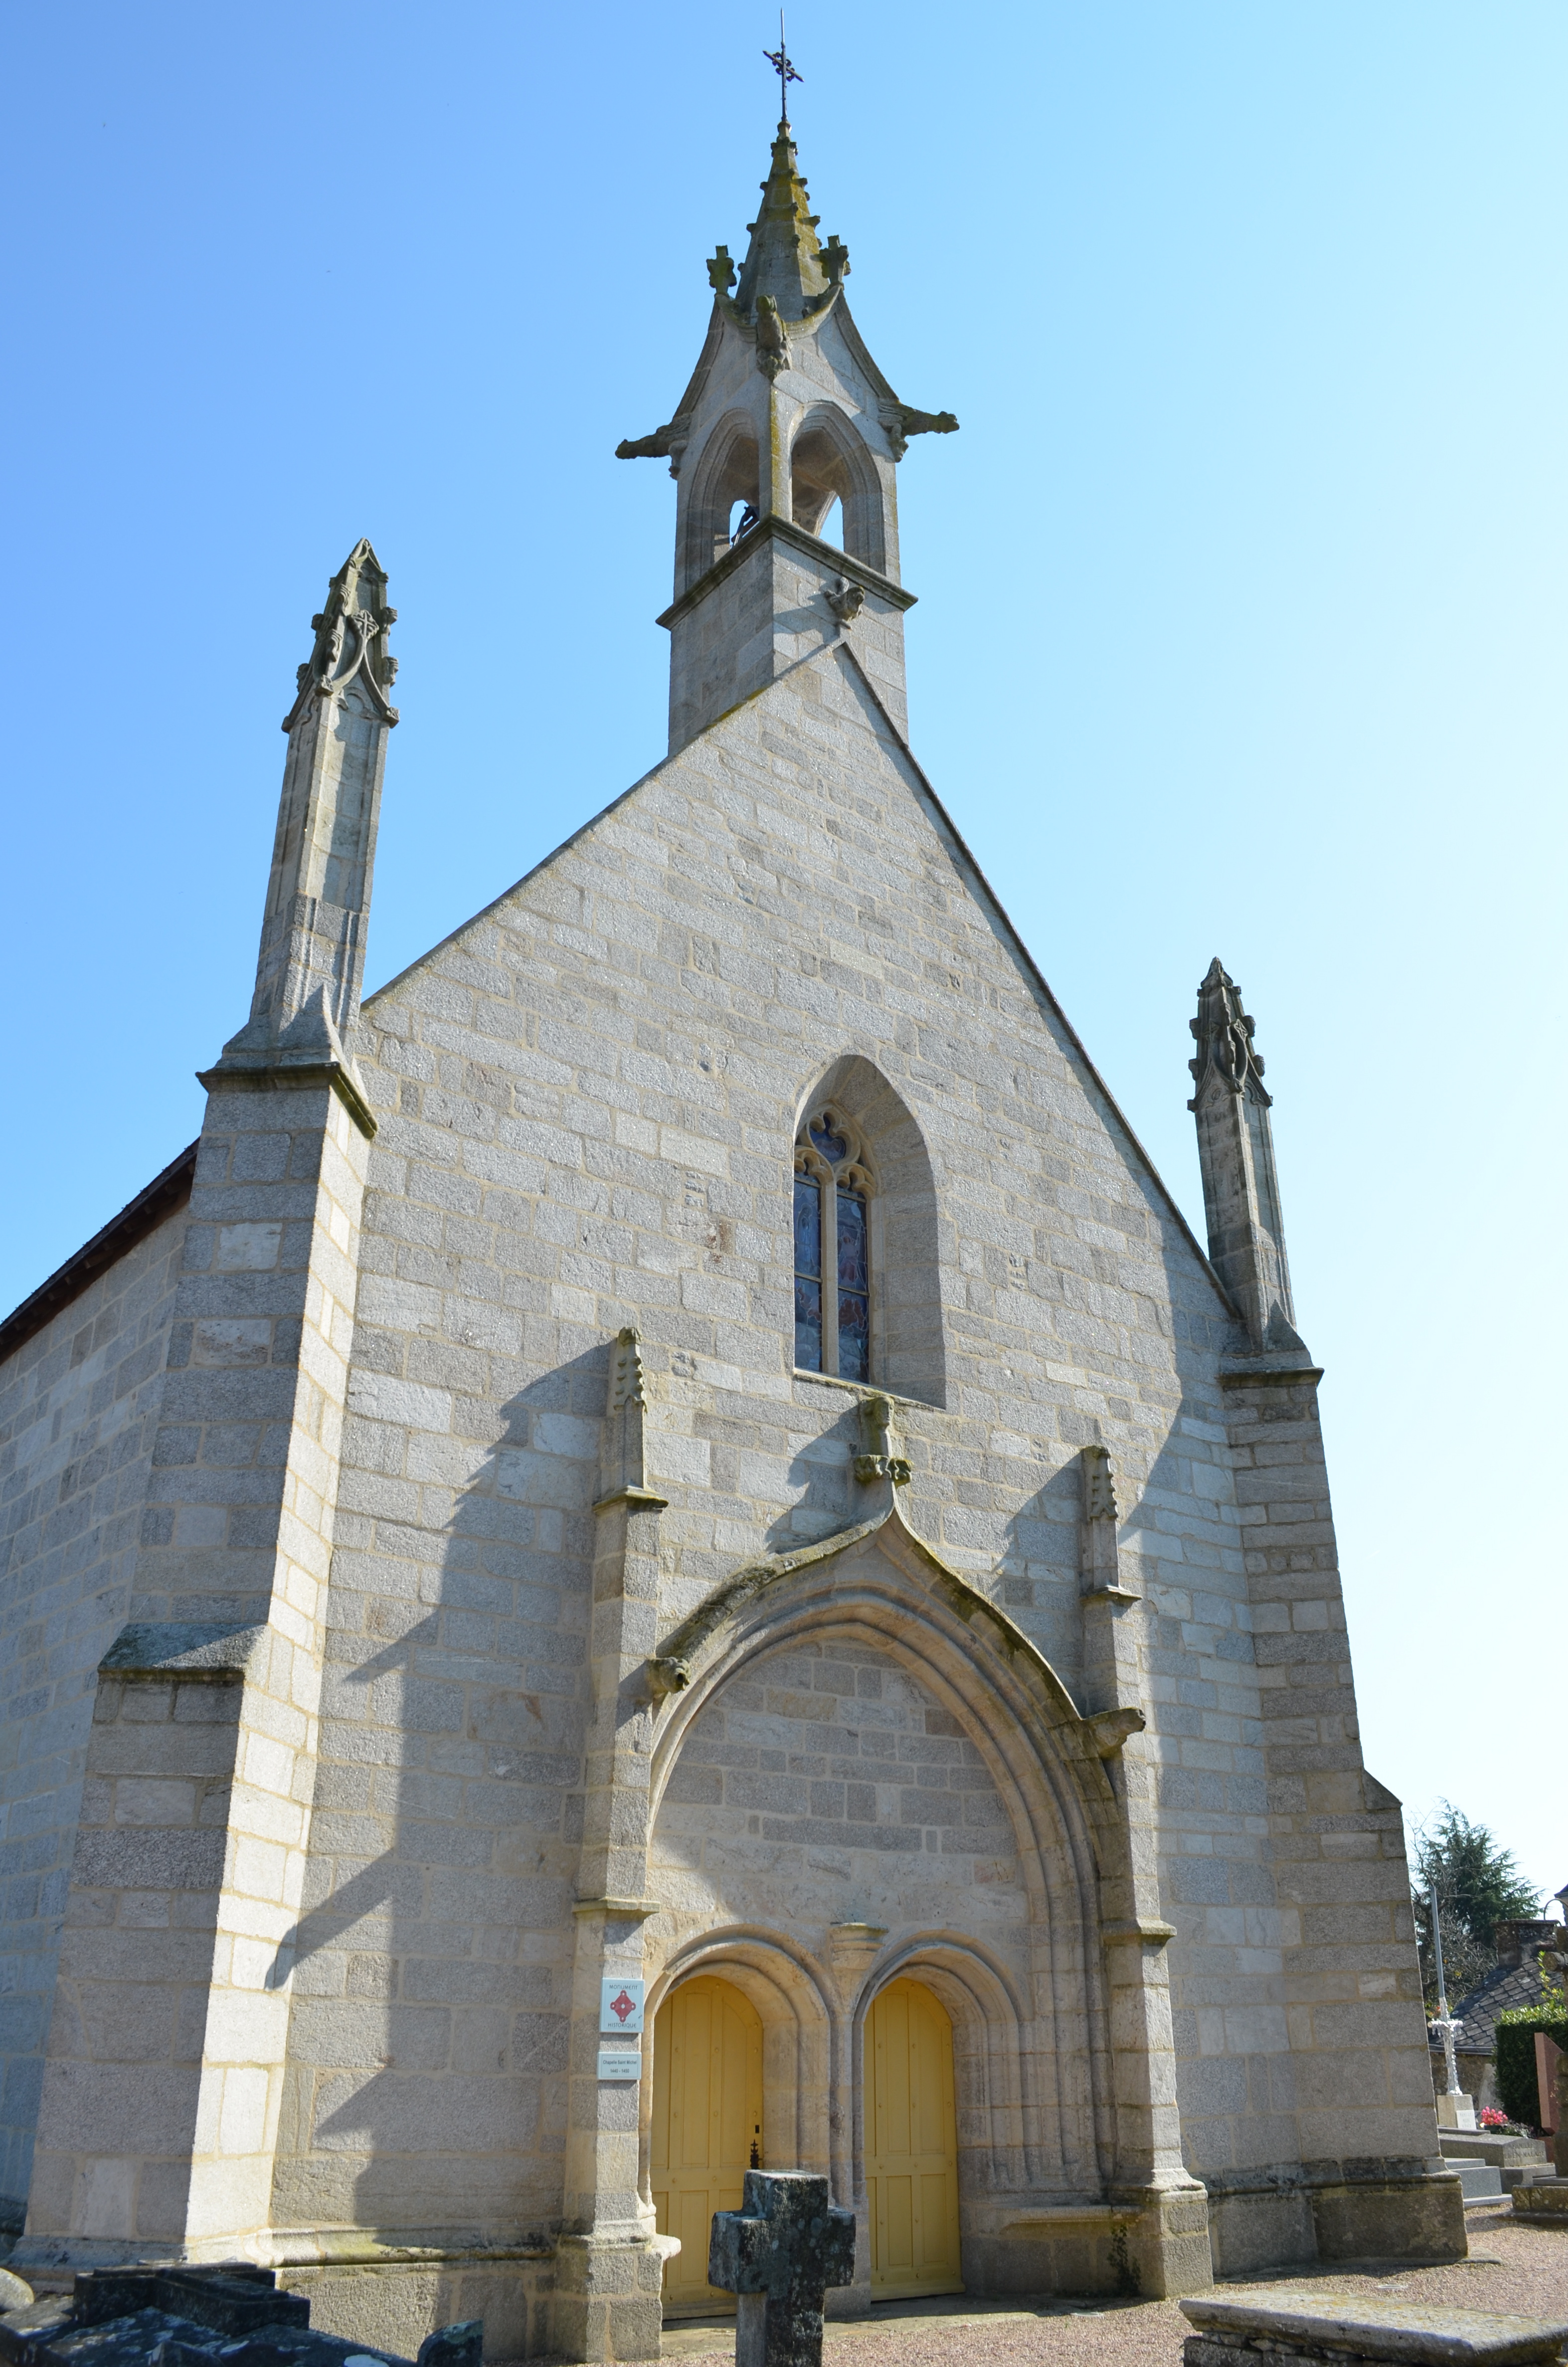 Chapelle Saint-Michel - Questembert null France null null null null